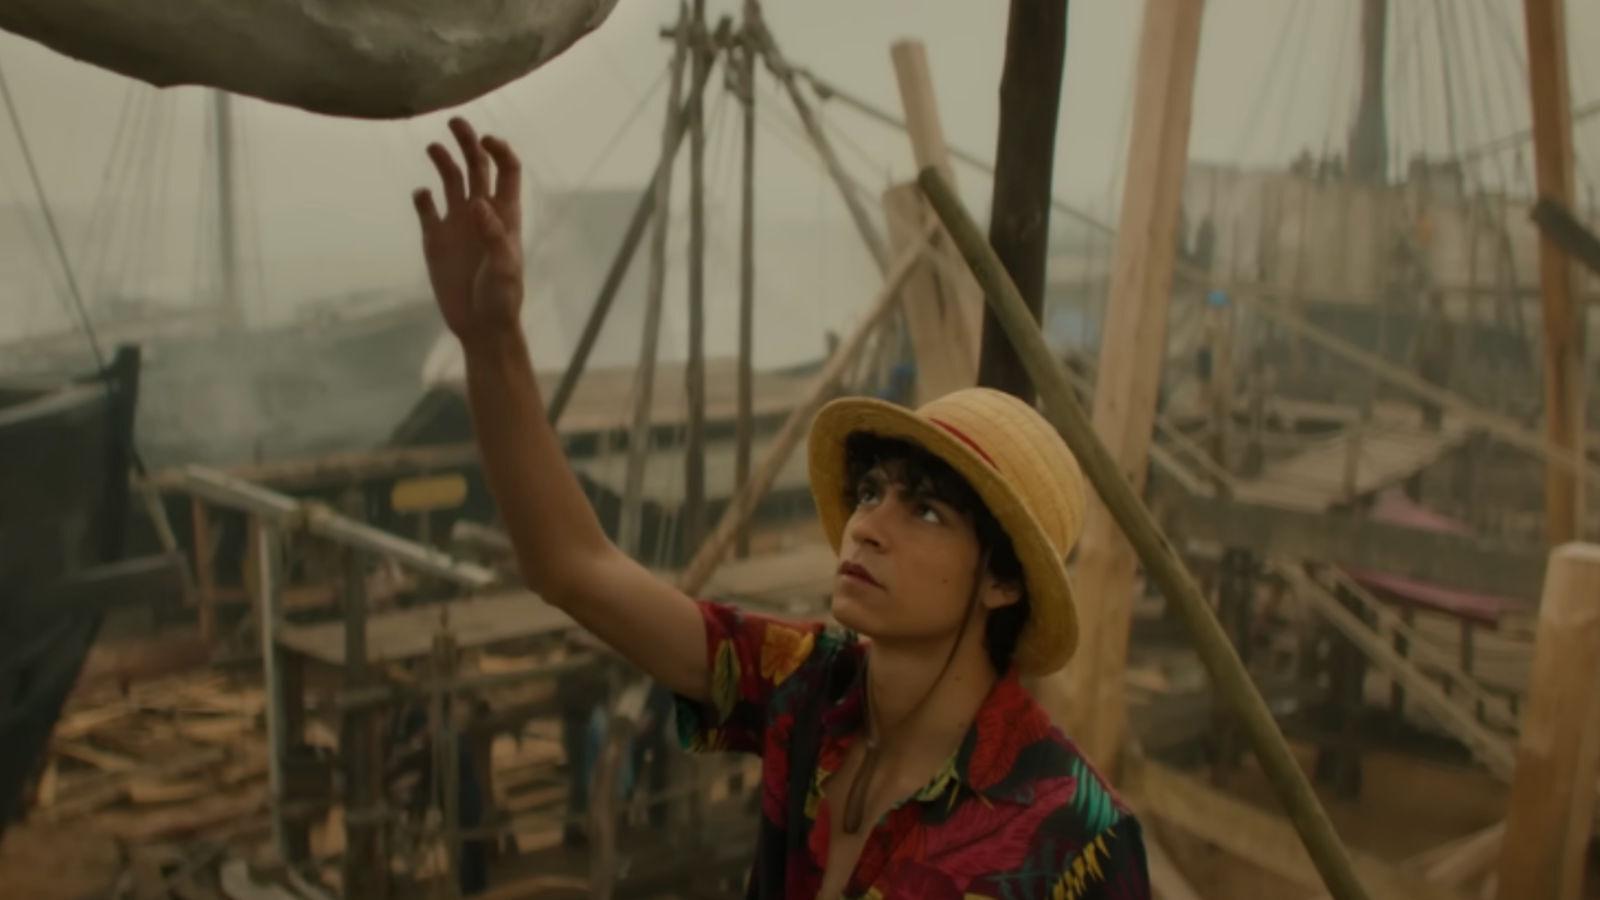 Netflix's live-action One Piece teaser sees Straw Hat Pirates set sail